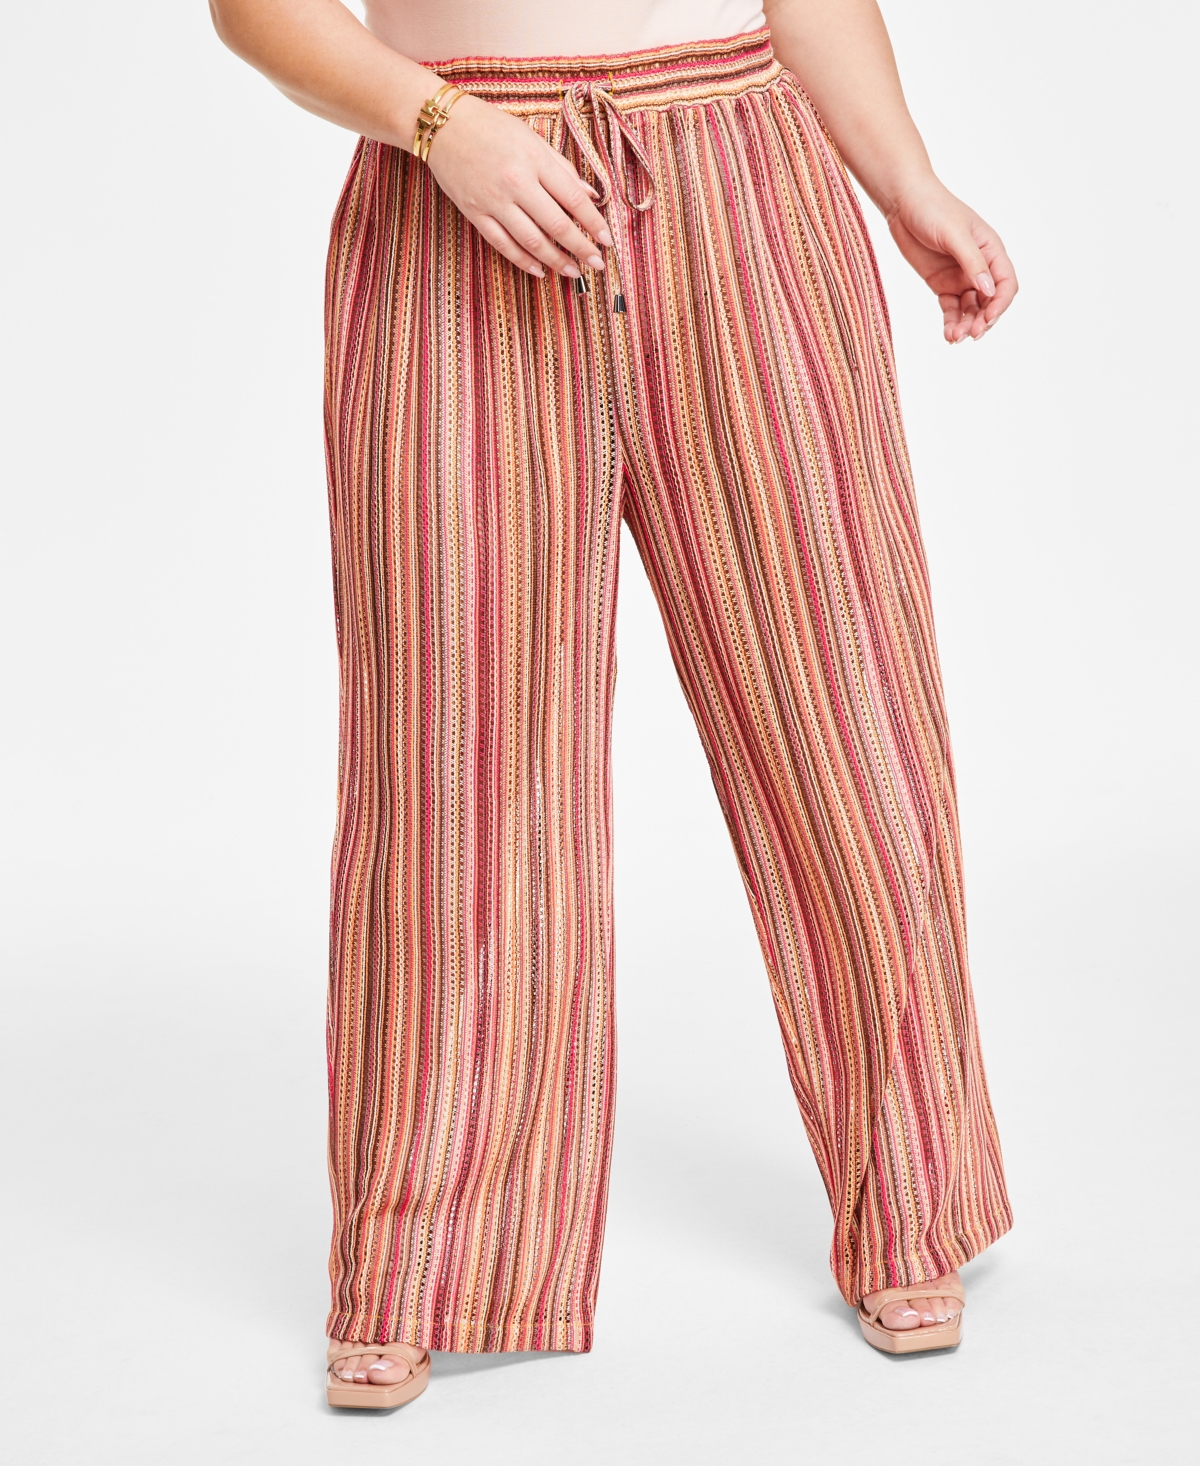 Nina Parker Trendy Plus Size Striped Crochet Pants